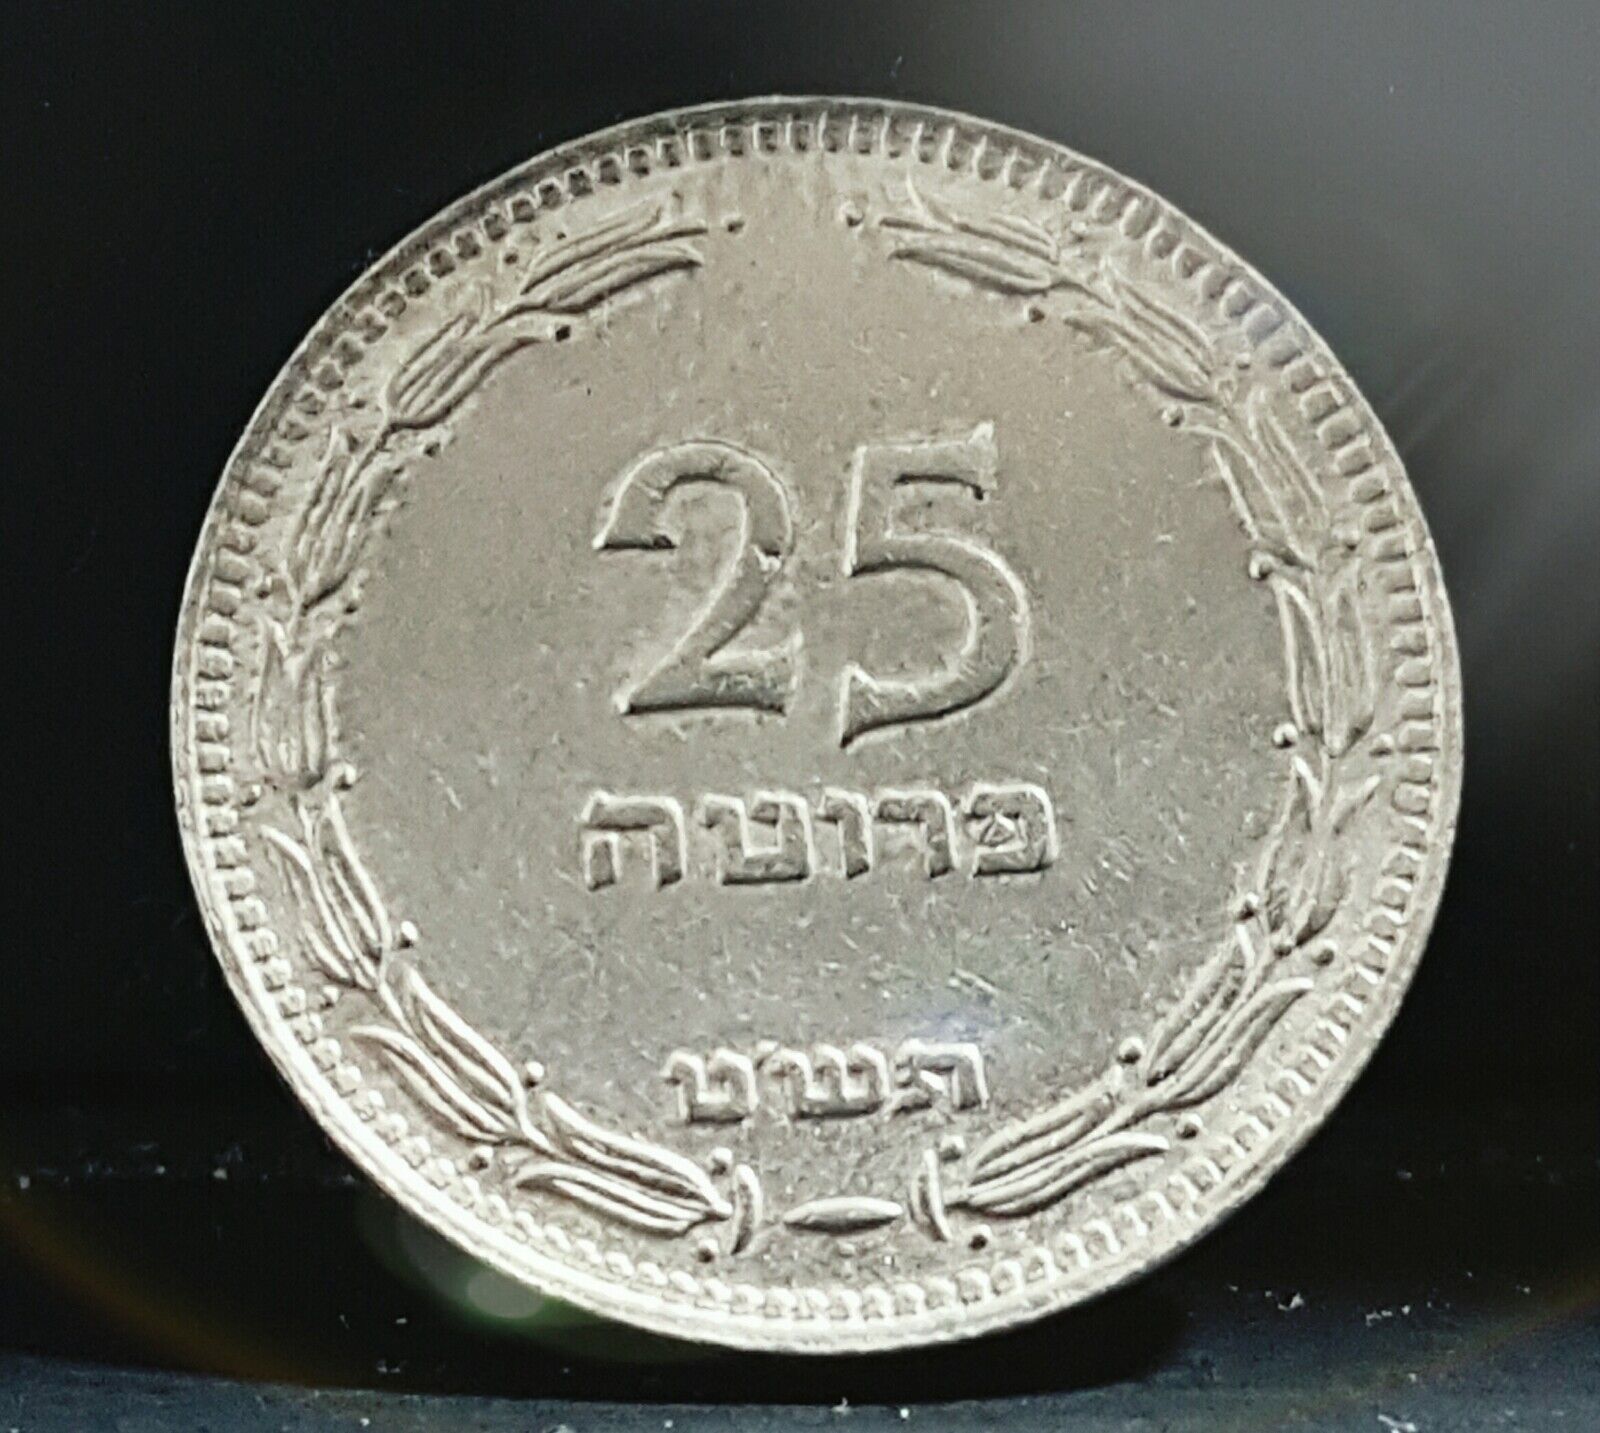 Israel Complete Set Coins Lot of 30 Coin Pruta Sheqalim Sheqel Agorot Since 1949 Без бренда - фотография #6